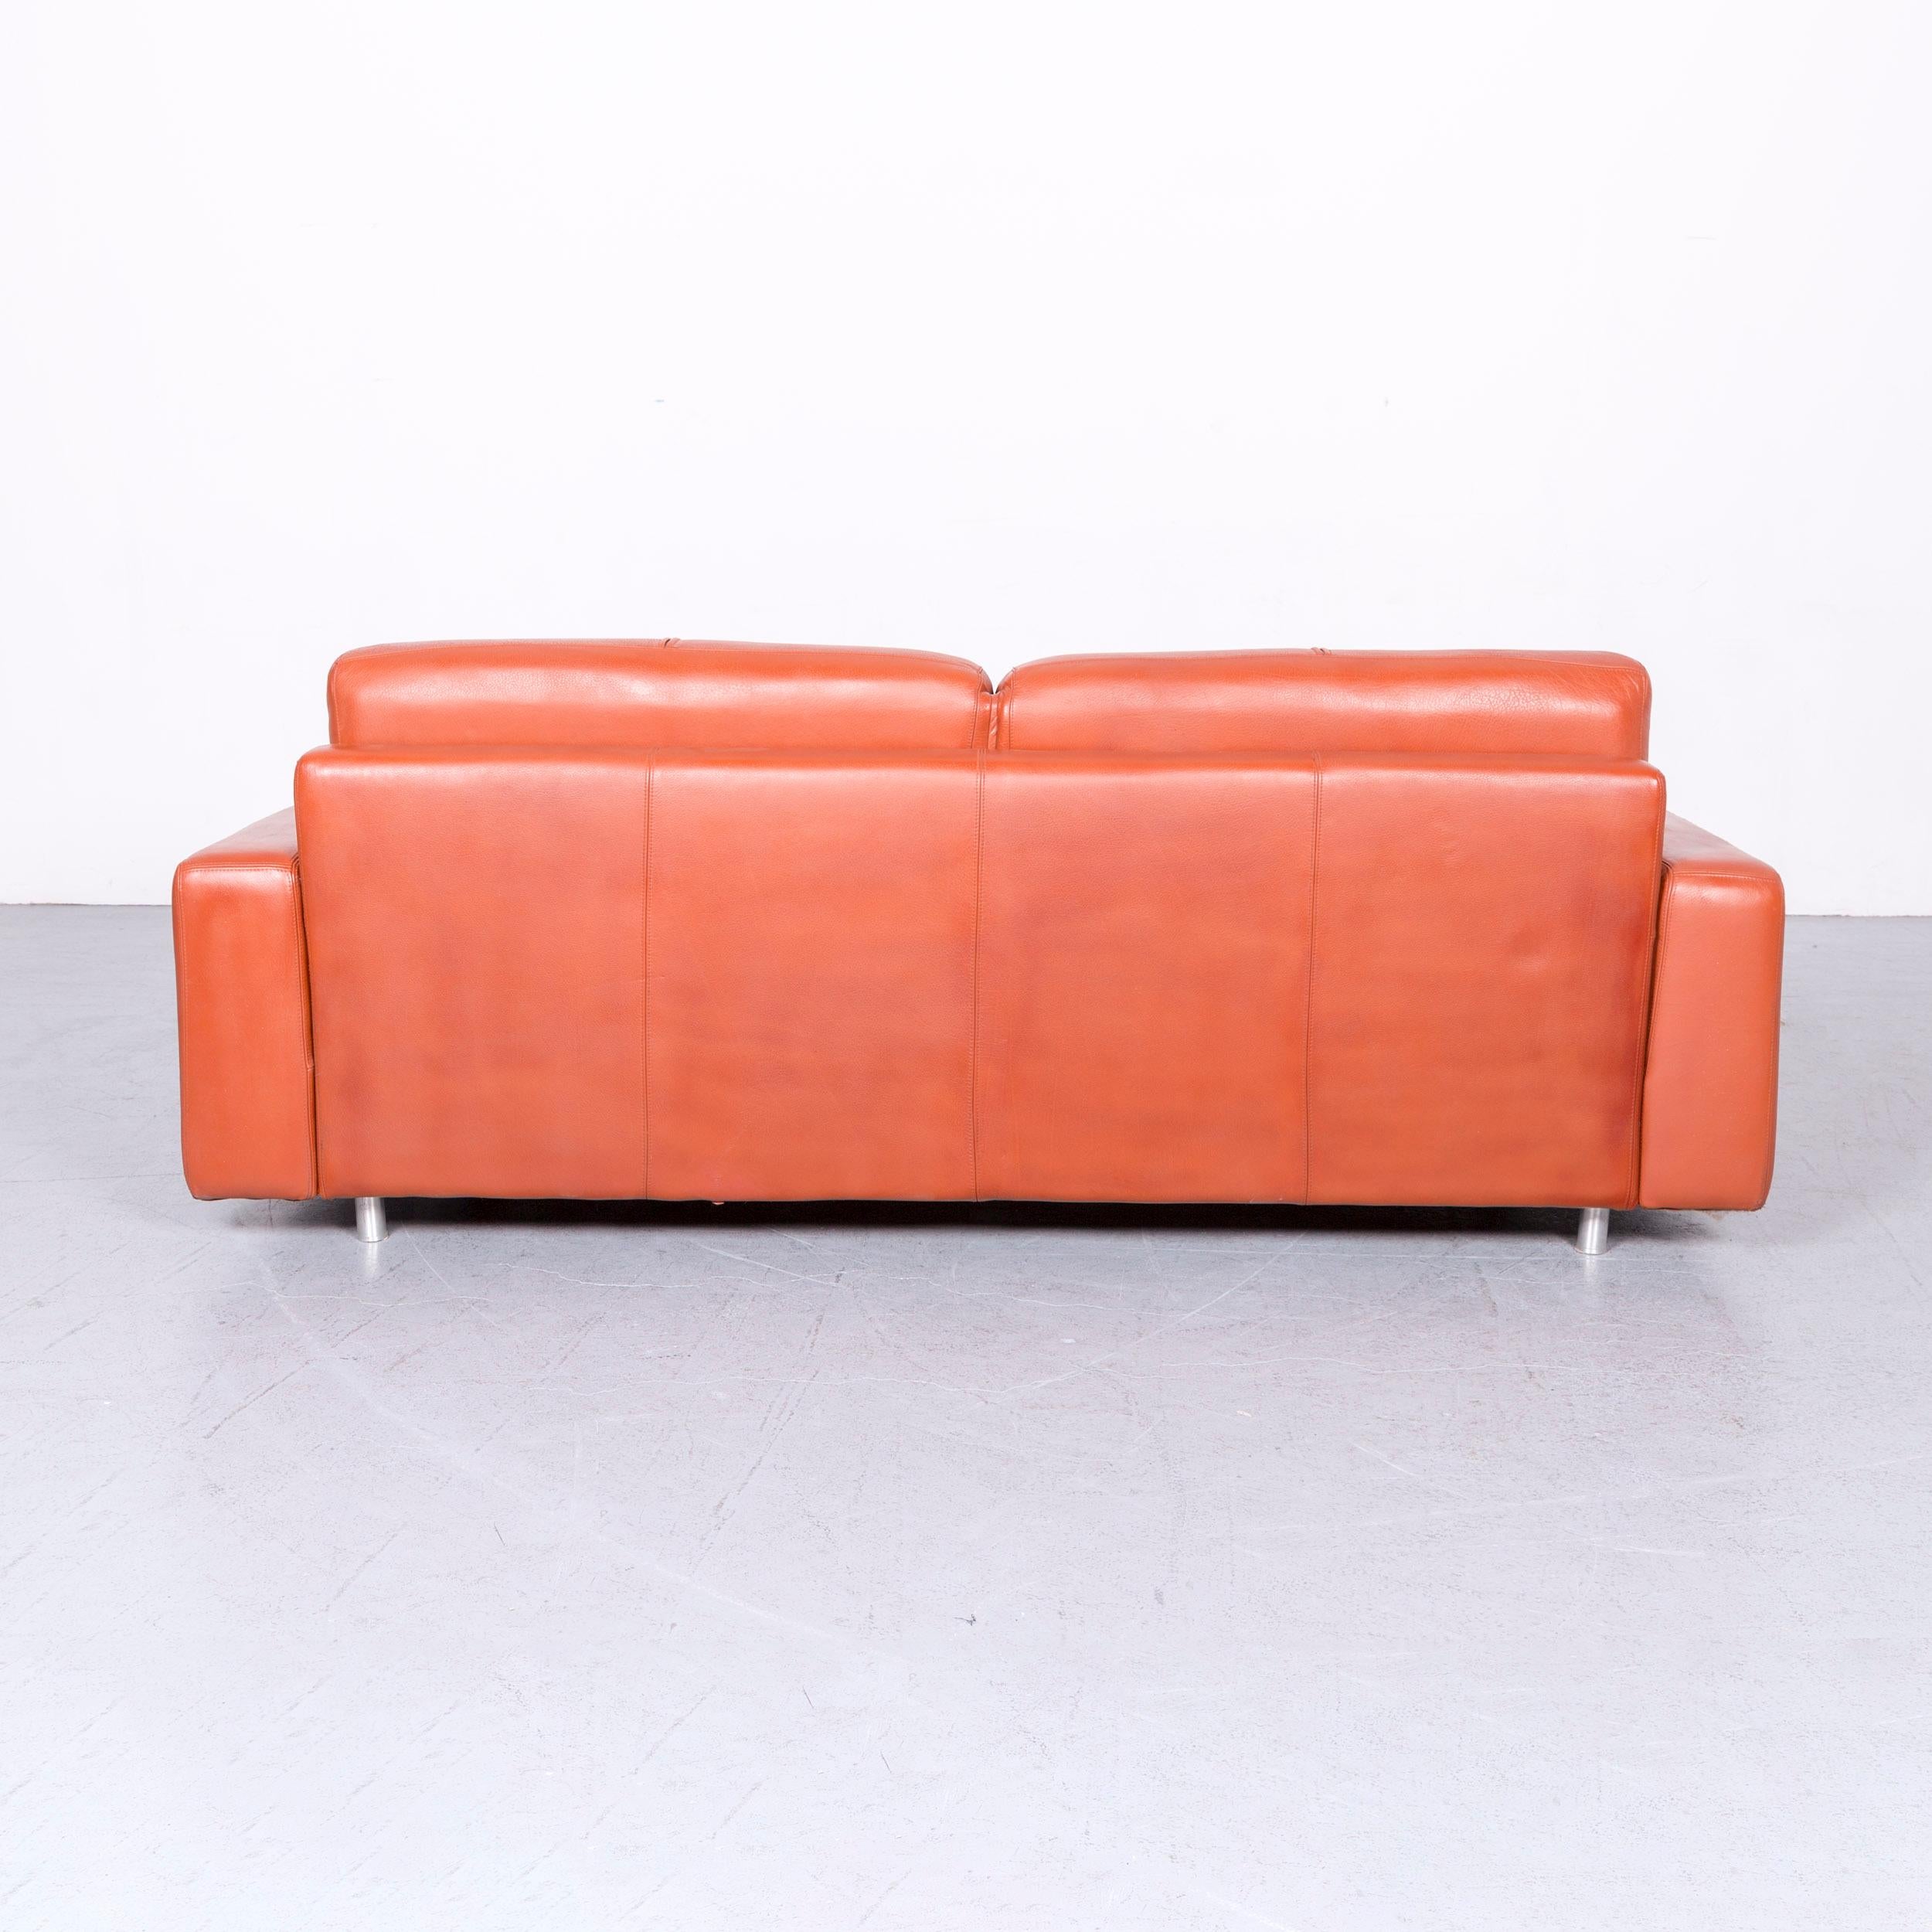 Cramer Leather Bed Sofa Orange Three-Seat Couch 4